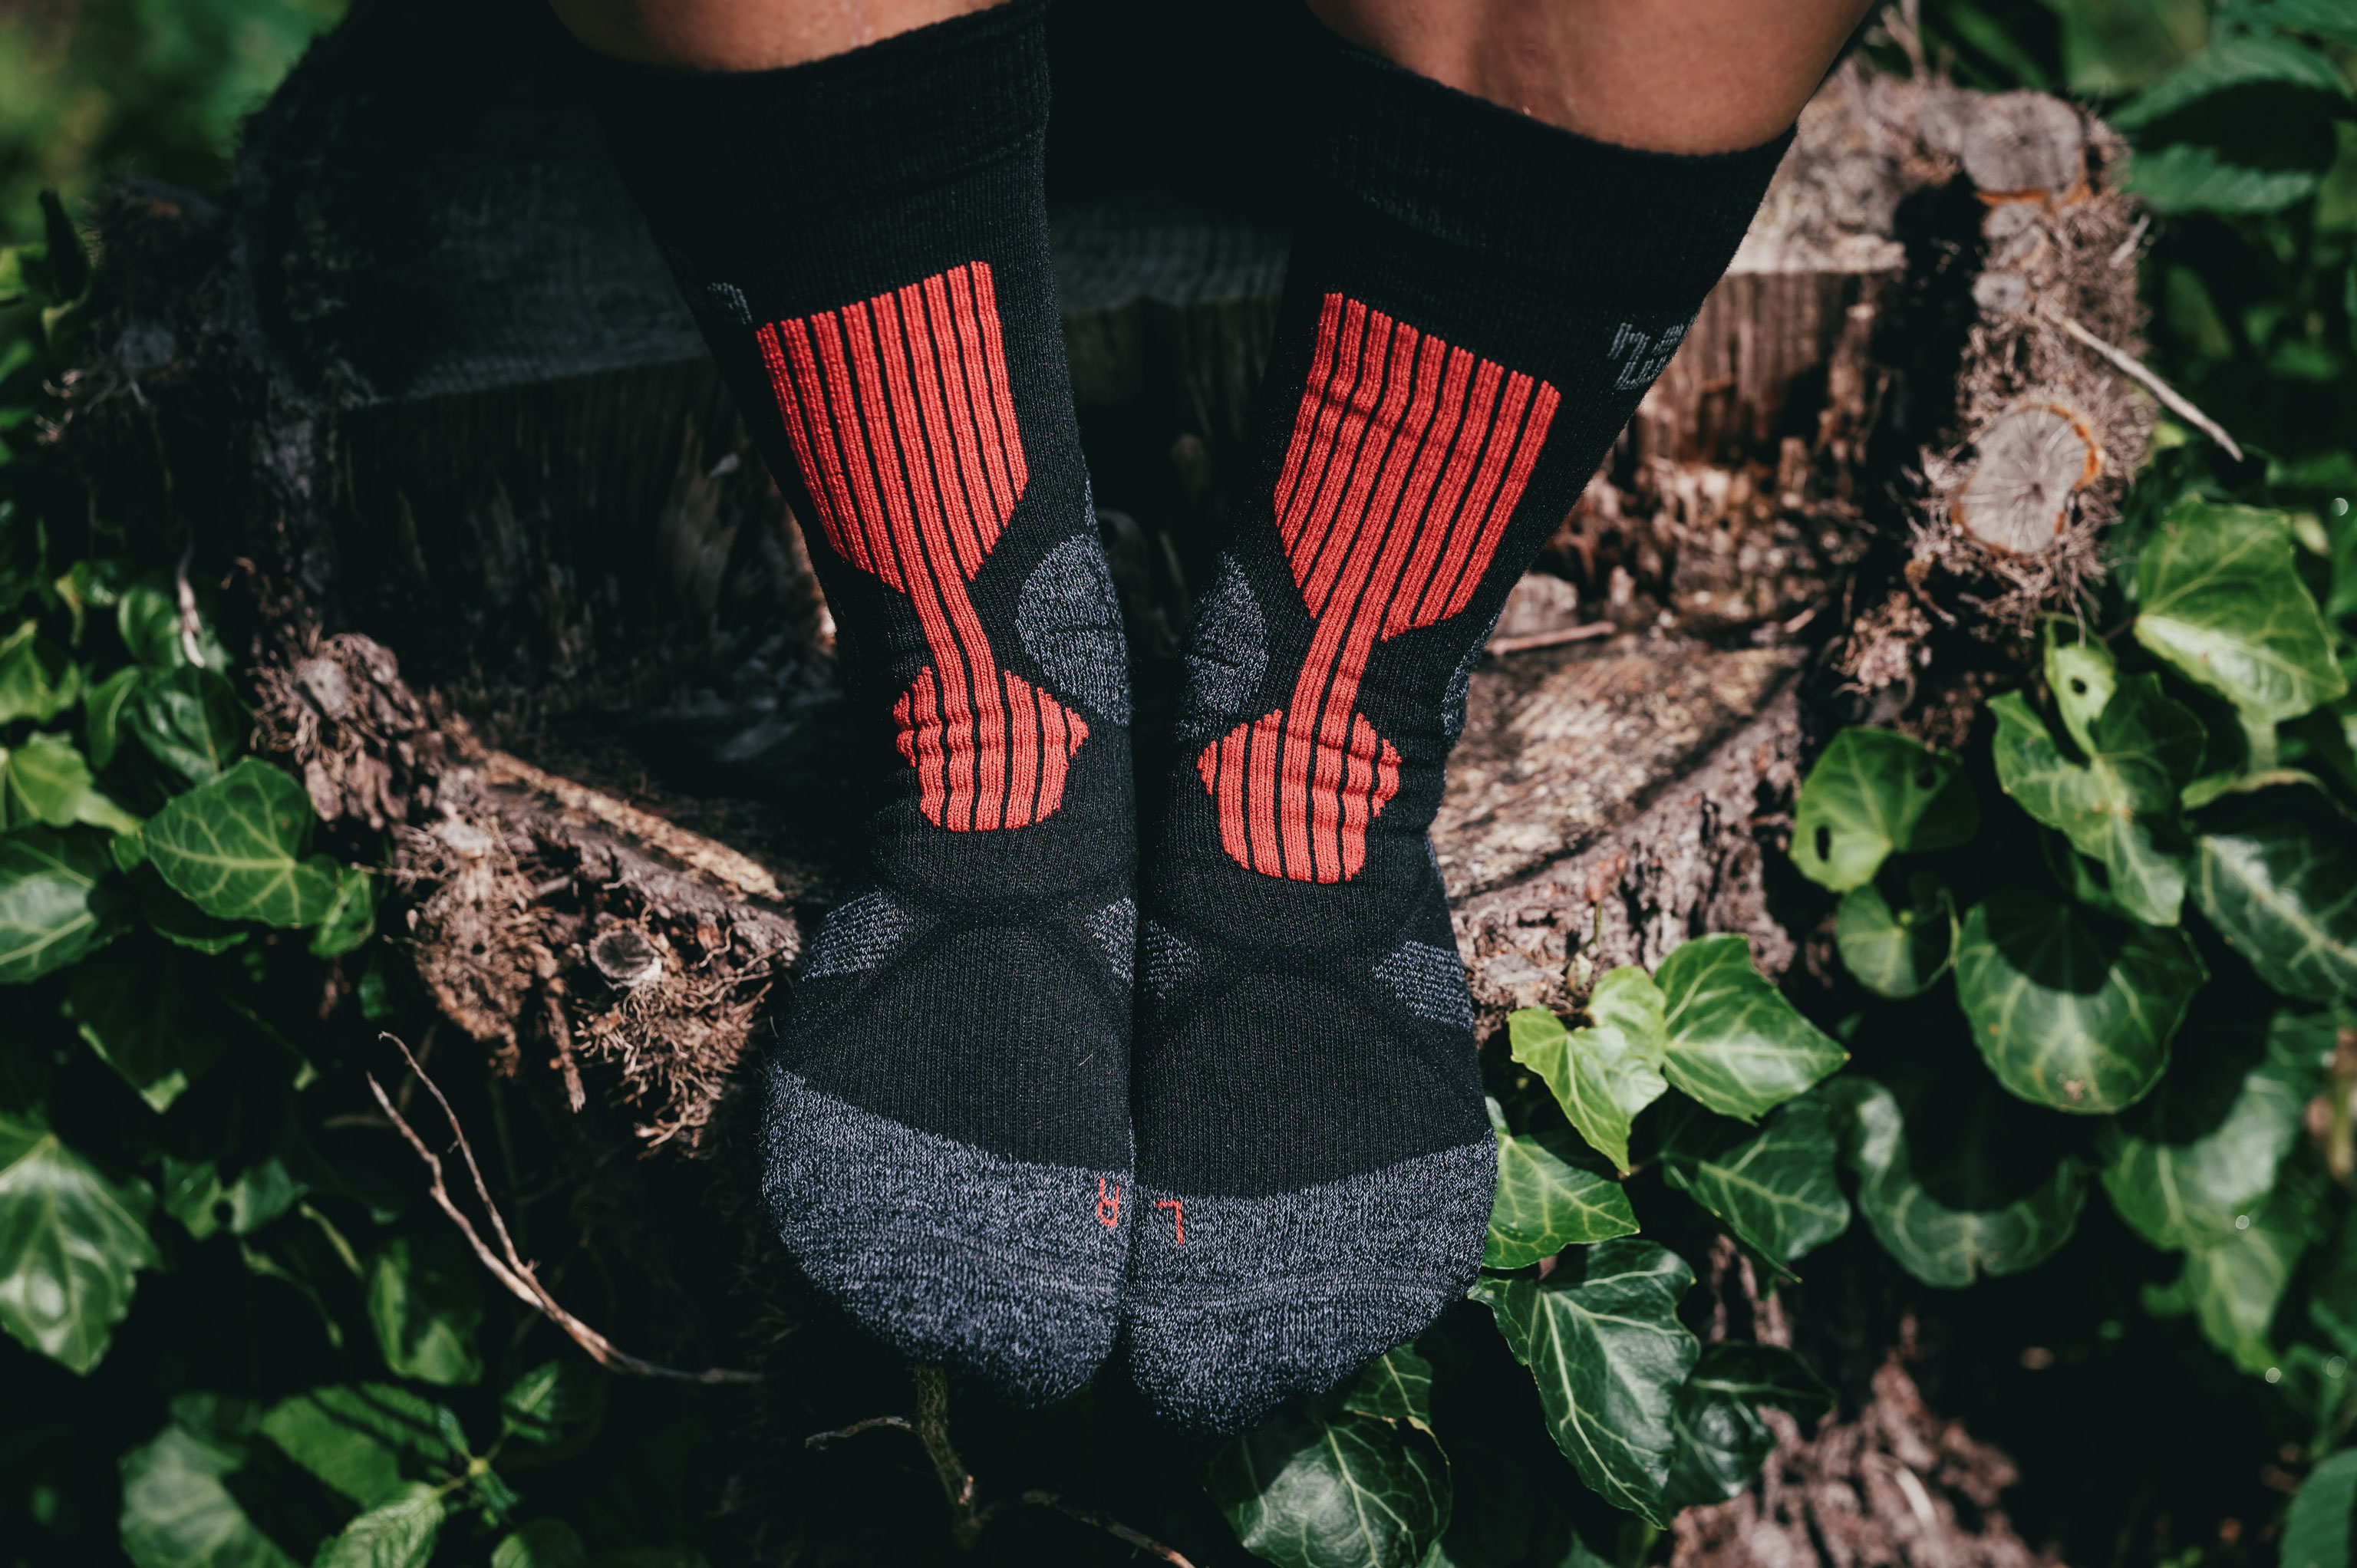 Socks for walking boots Hiking sock material merino wool